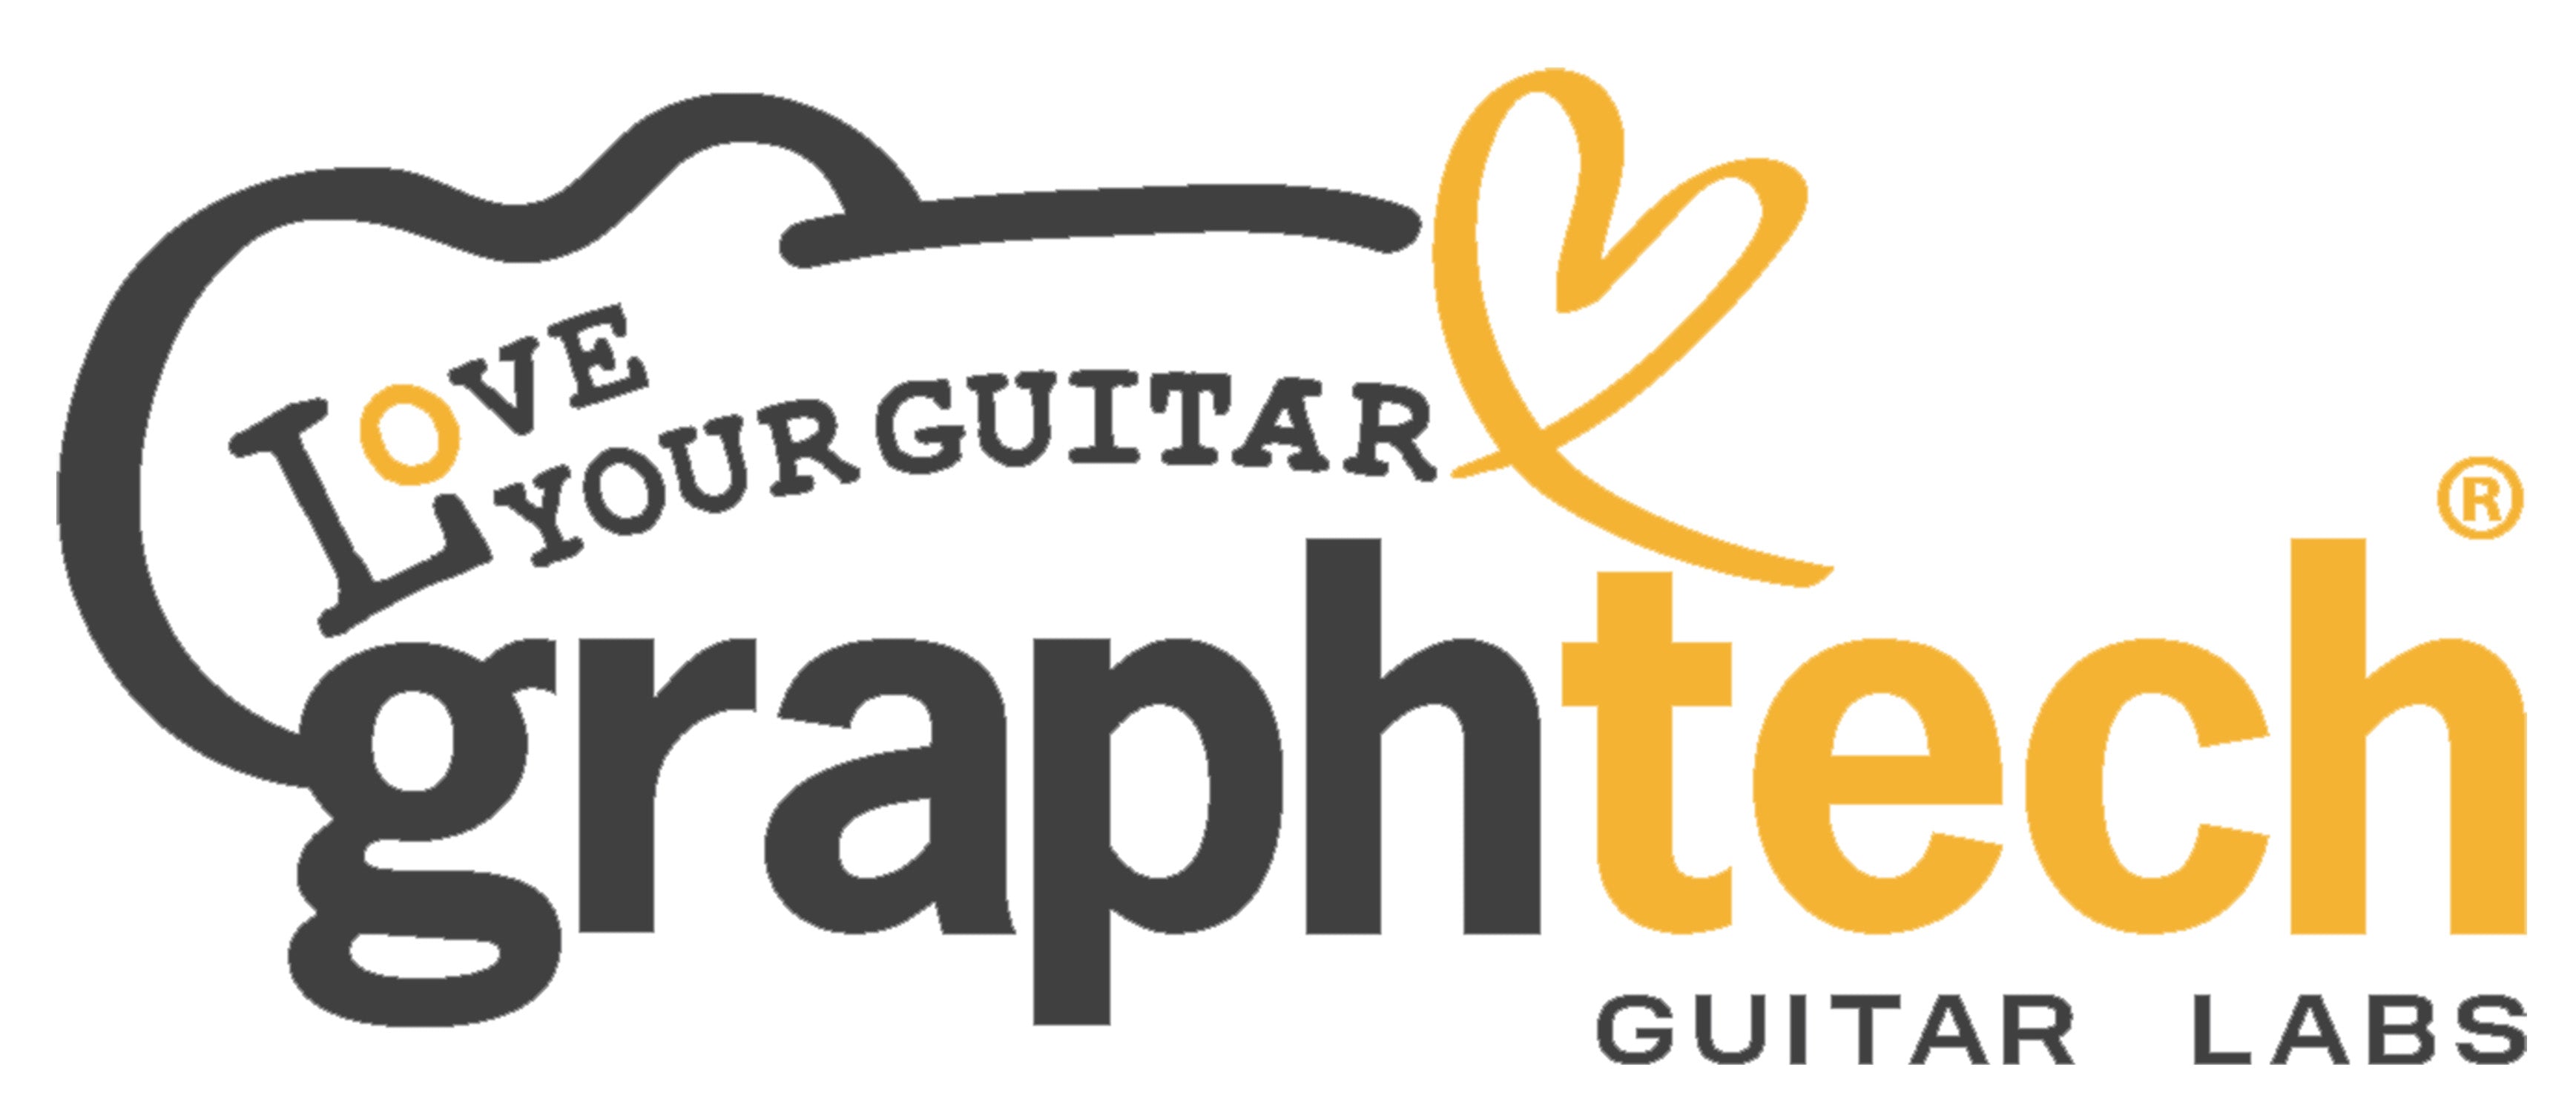 ghost 9v Battery Box  Graph Tech Guitar Labs